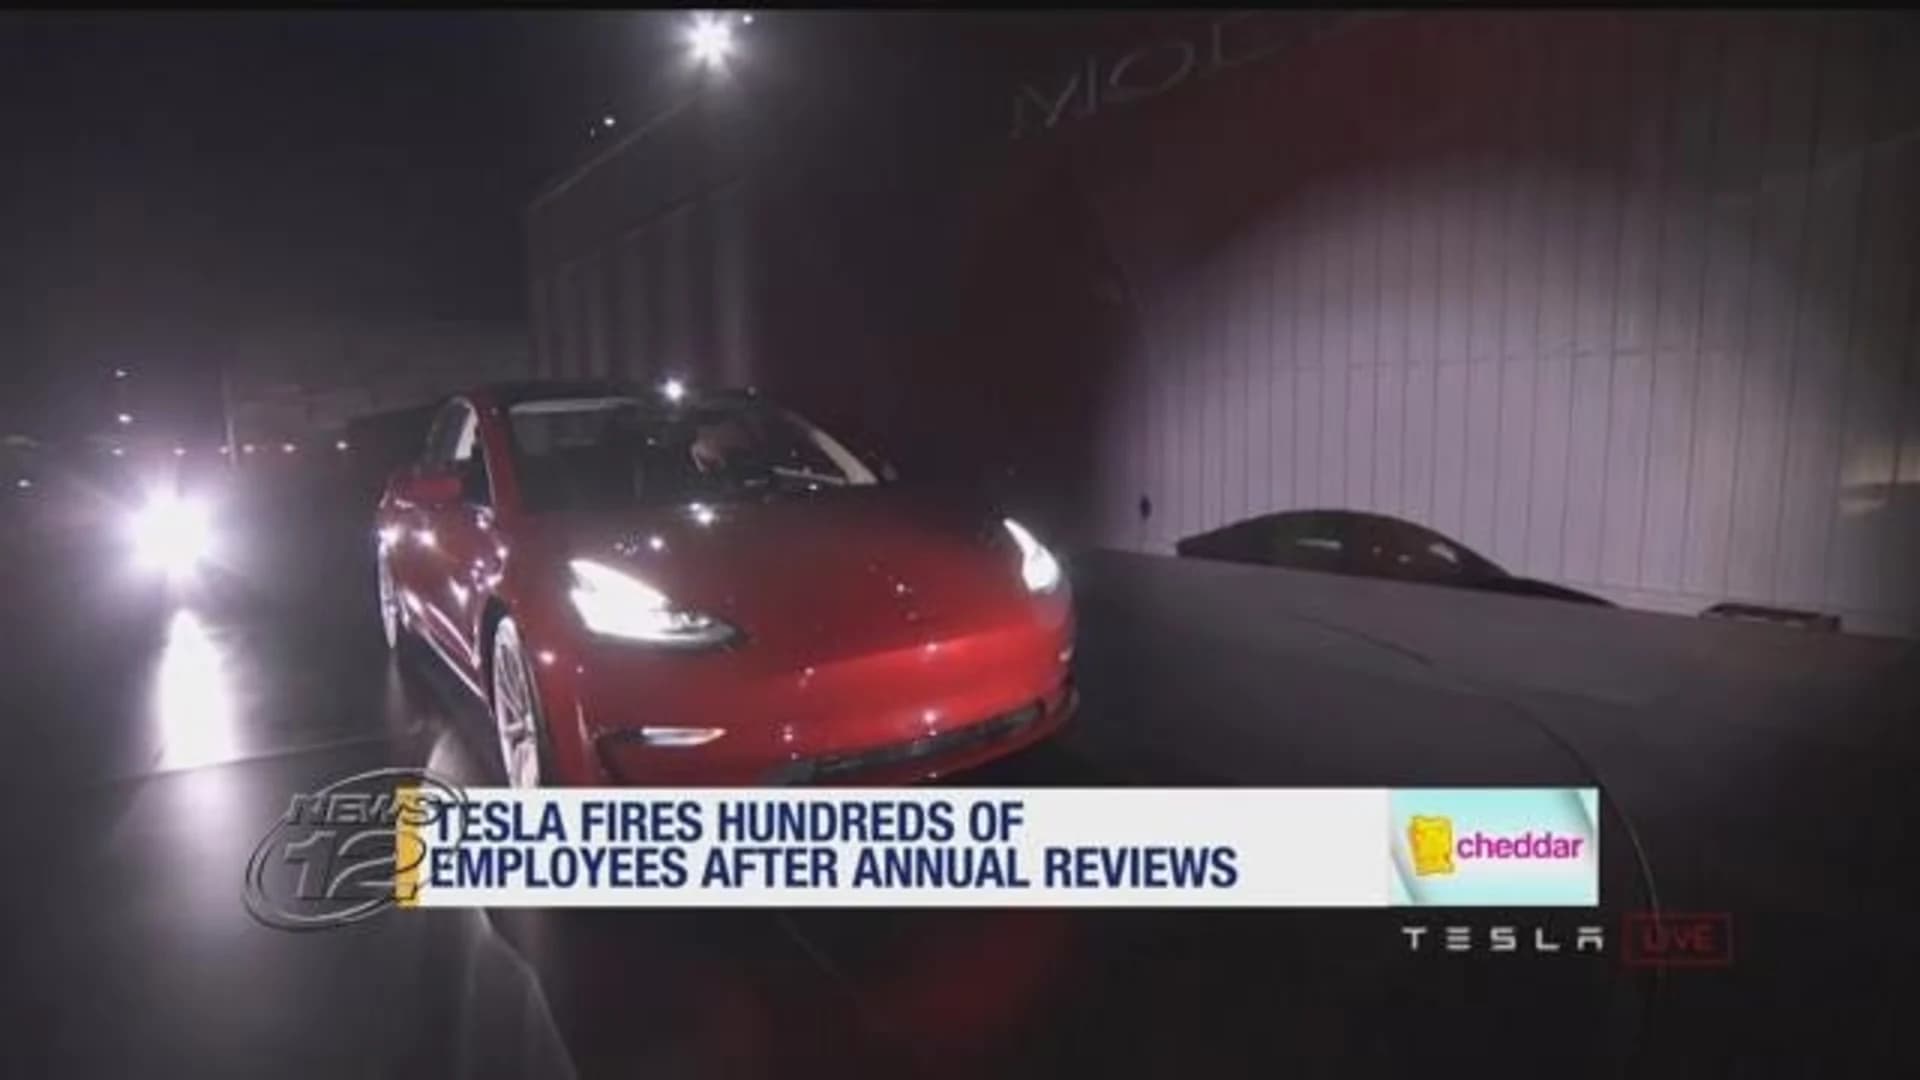 Cheddar Morning Business Update 10/16: Tesla fires hundreds of employees